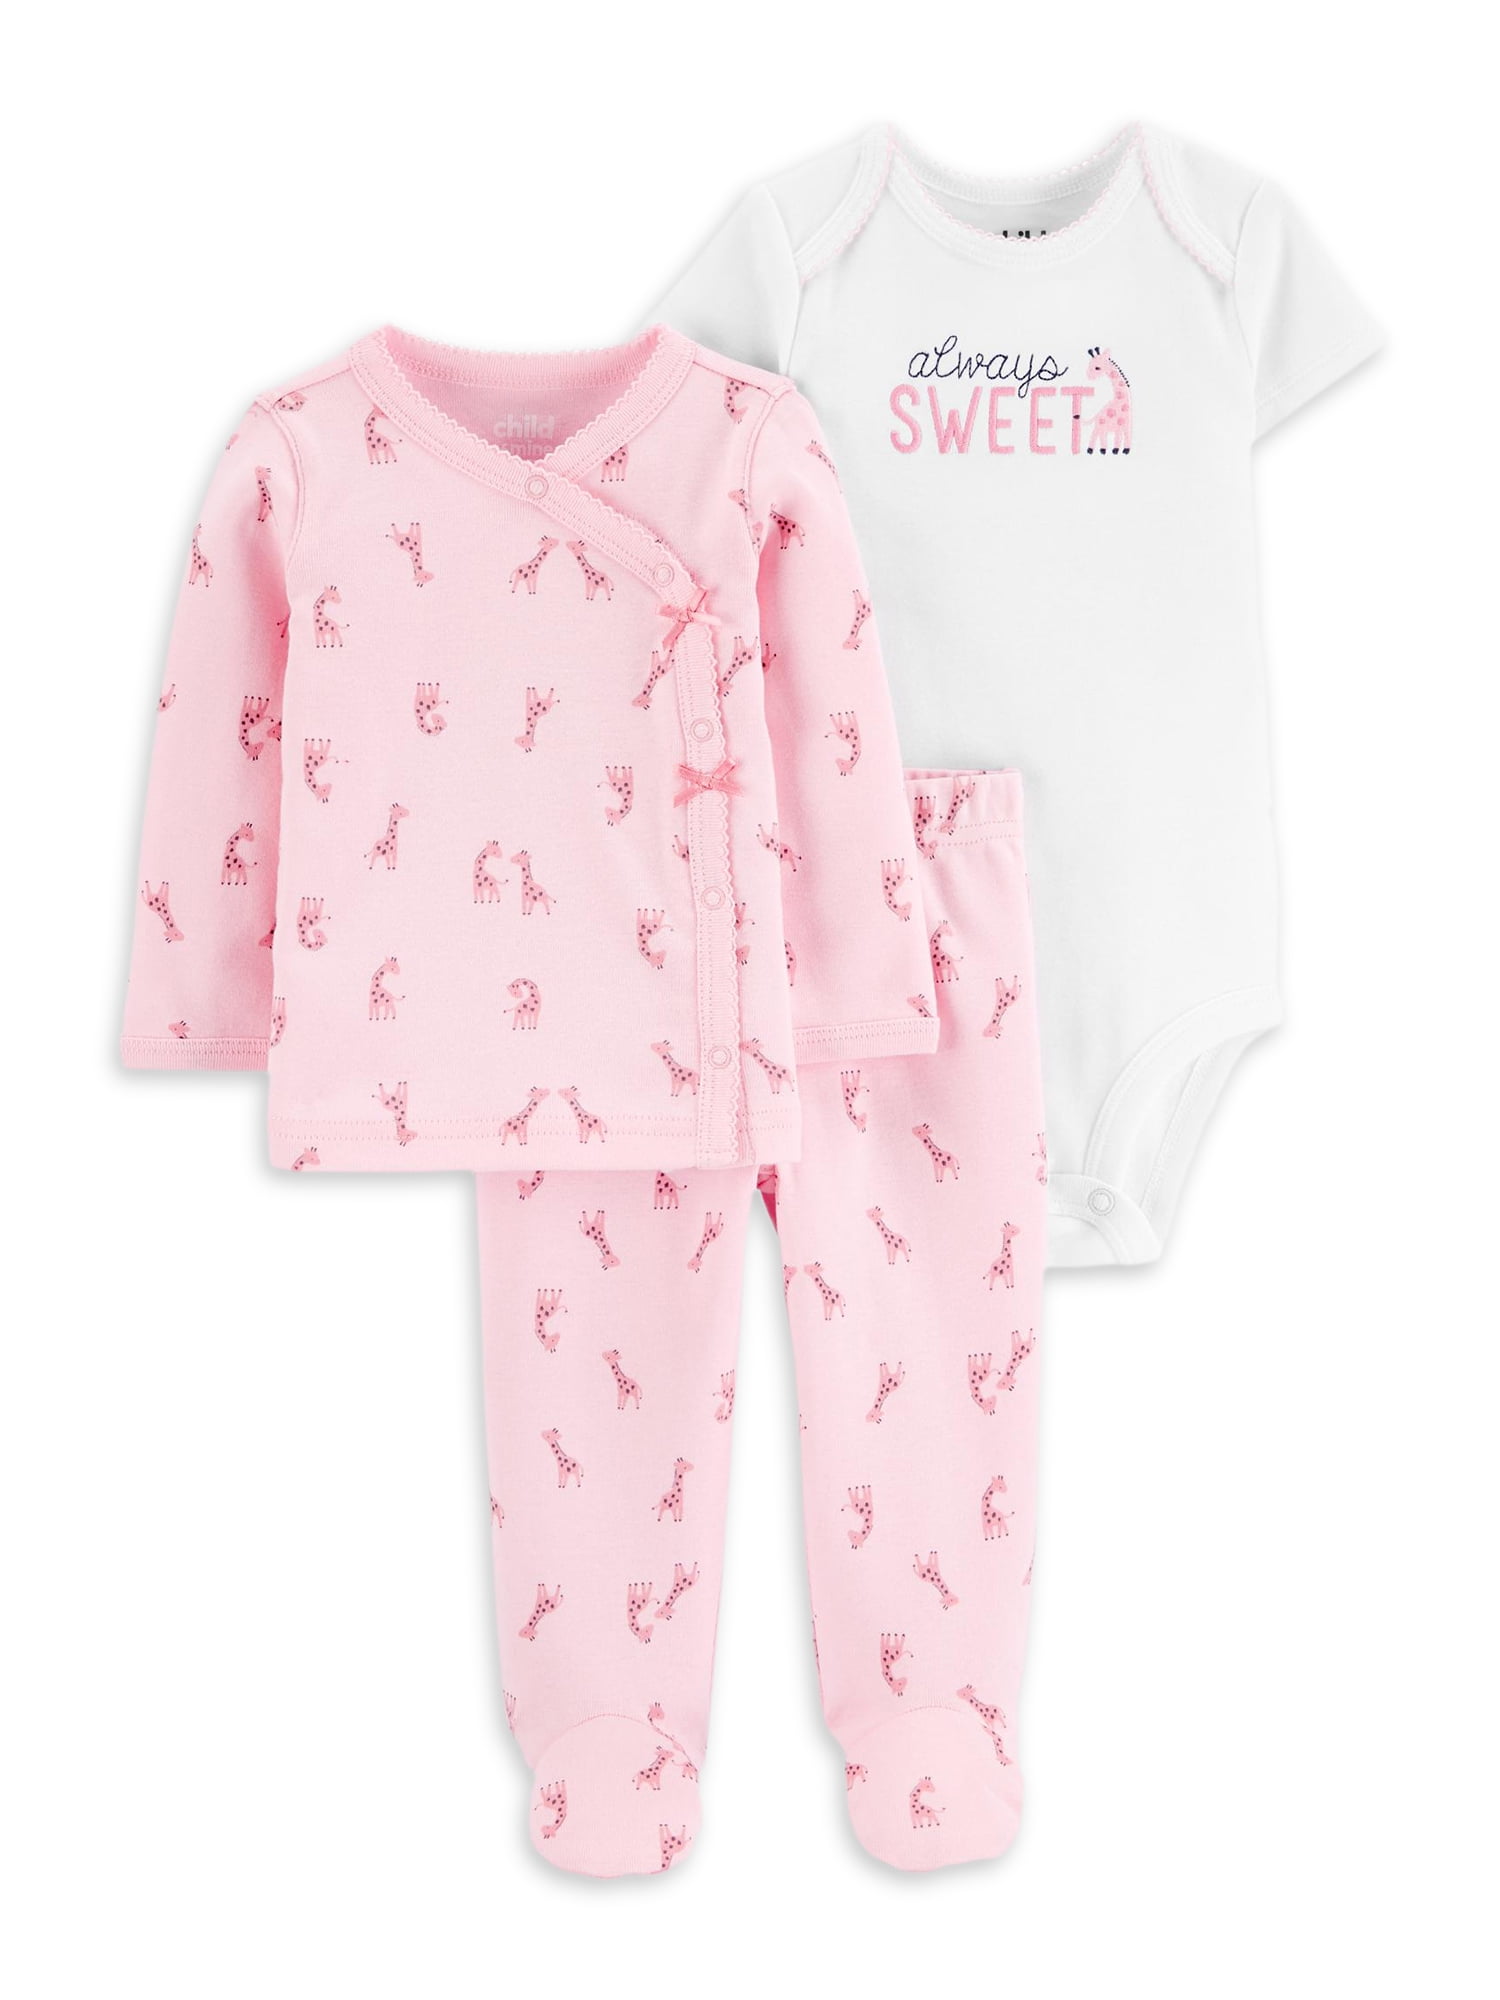 NWT Child Mine,Carters Baby Girl BODYSUIT 3p Set GIRAFFE Pink//Floral//Grey SMILE